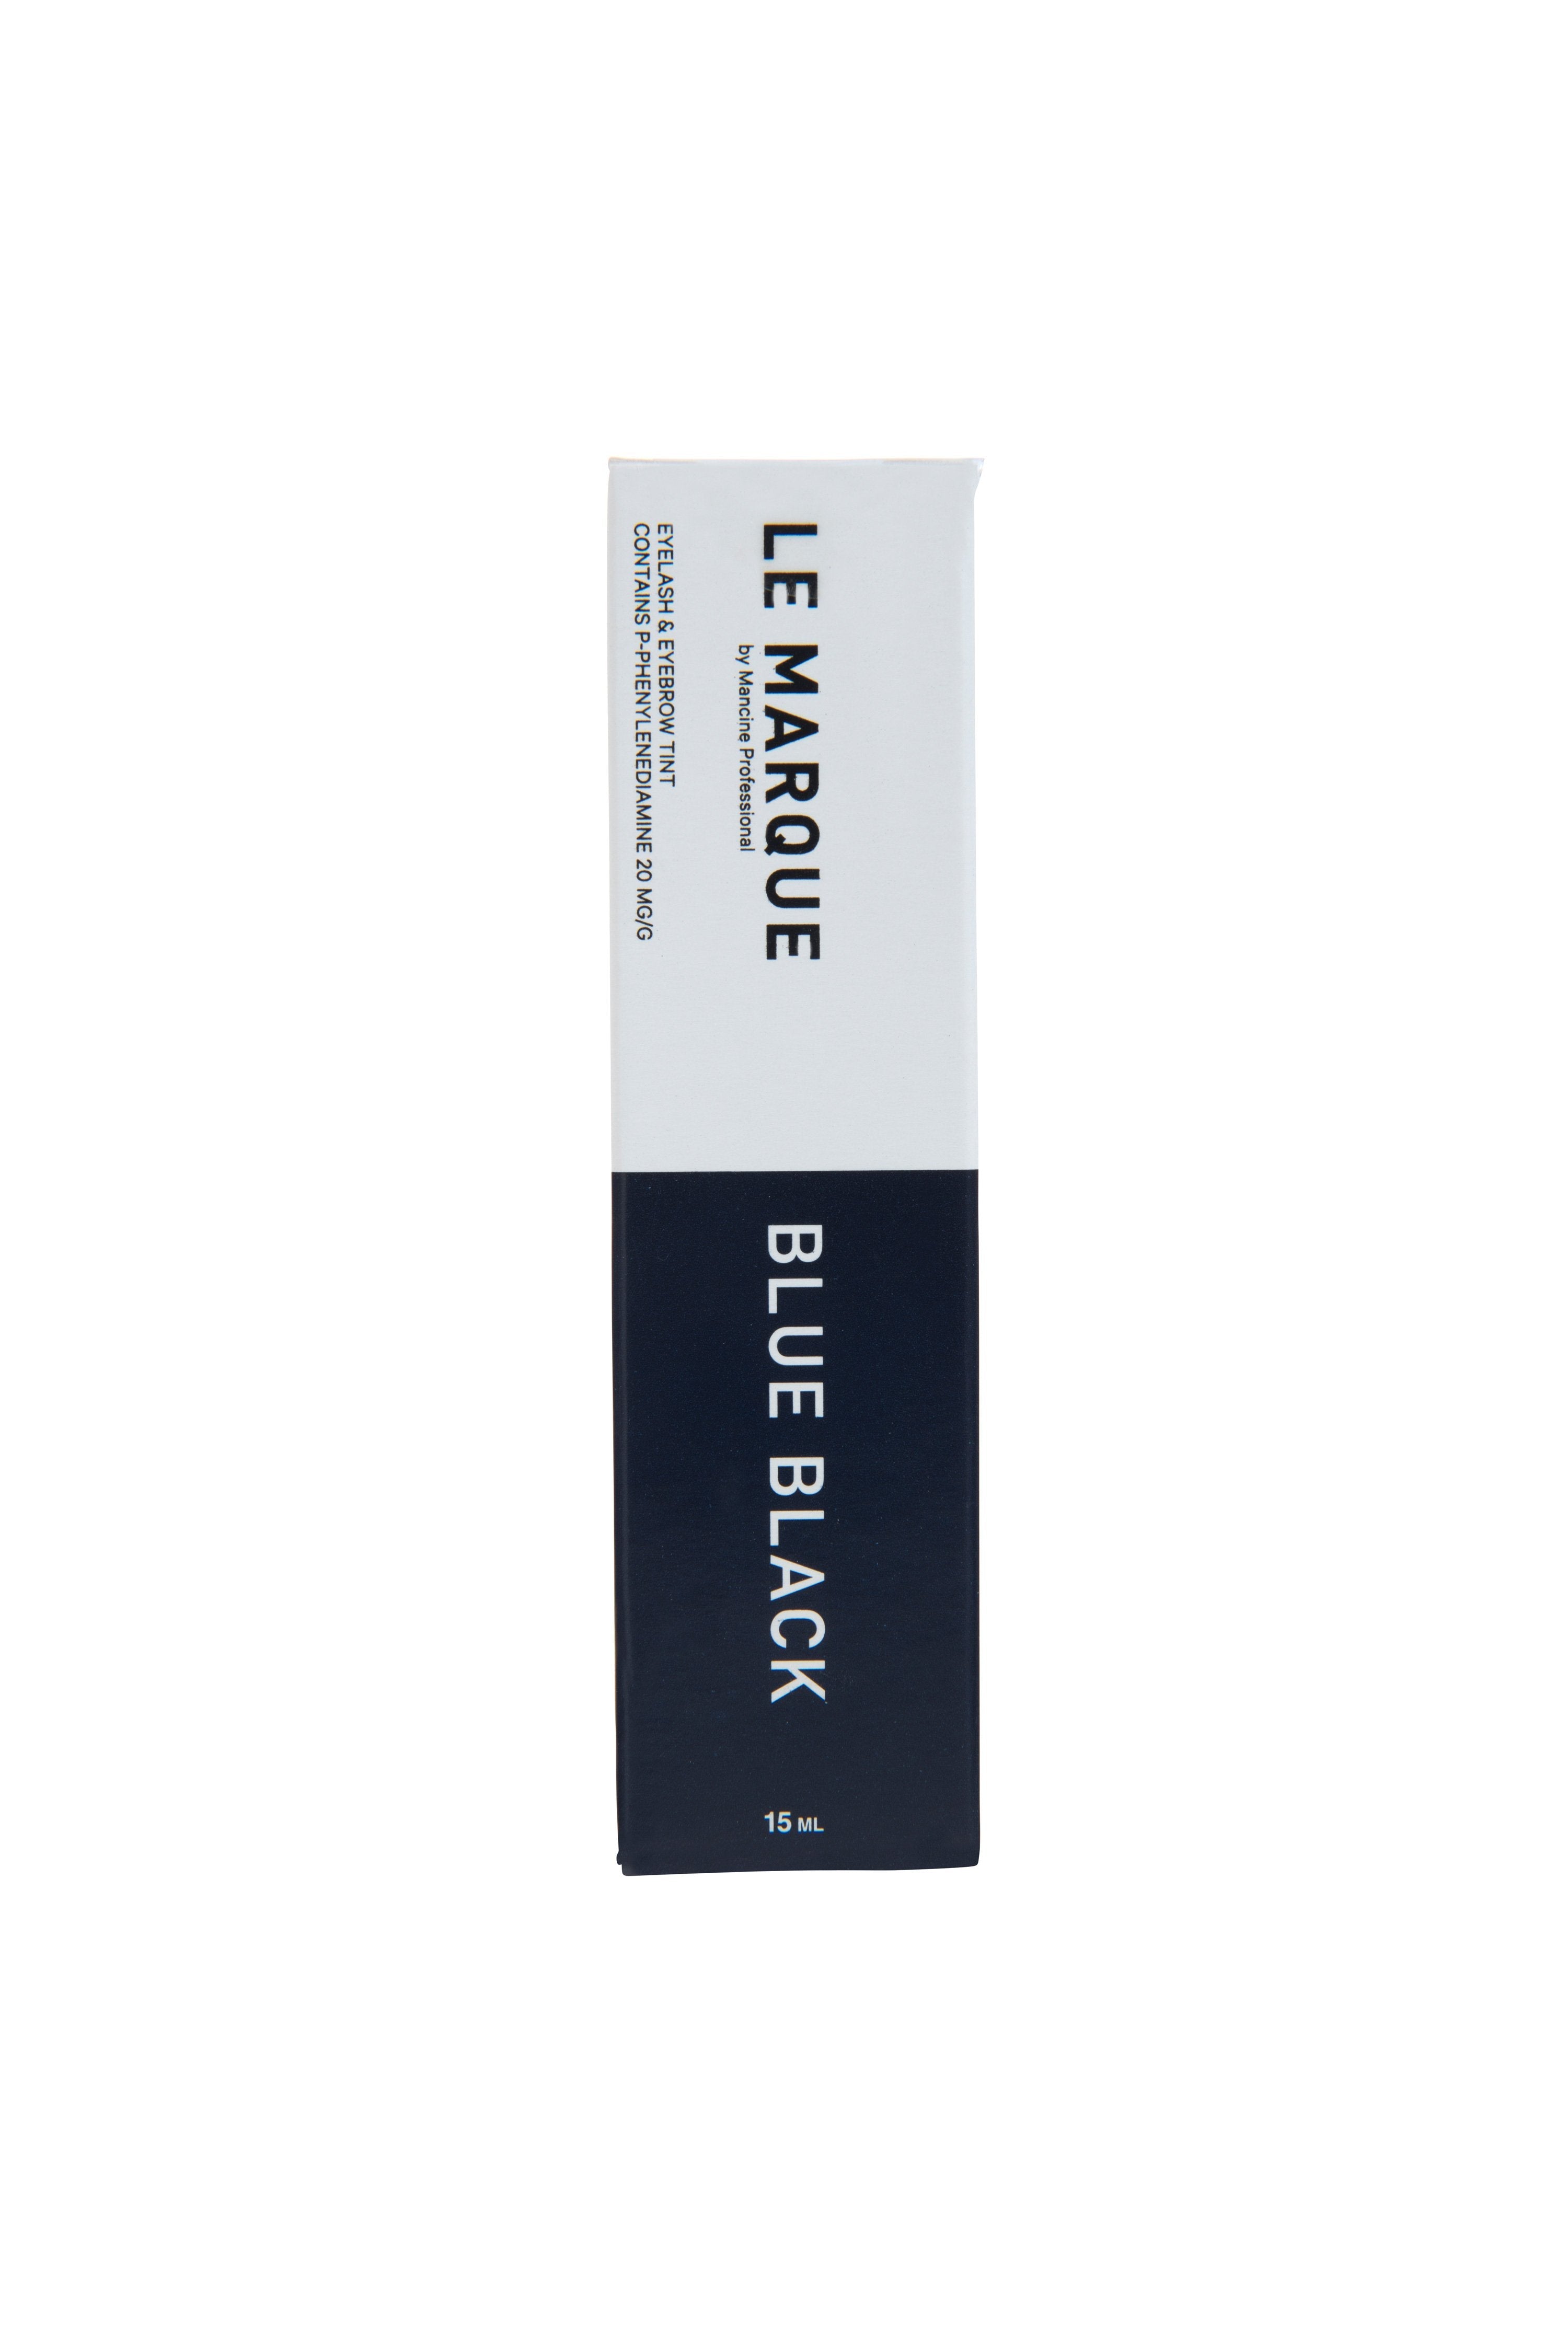 Le Marque Eyebrow & Eyelash Tint / Blue Black 15ml